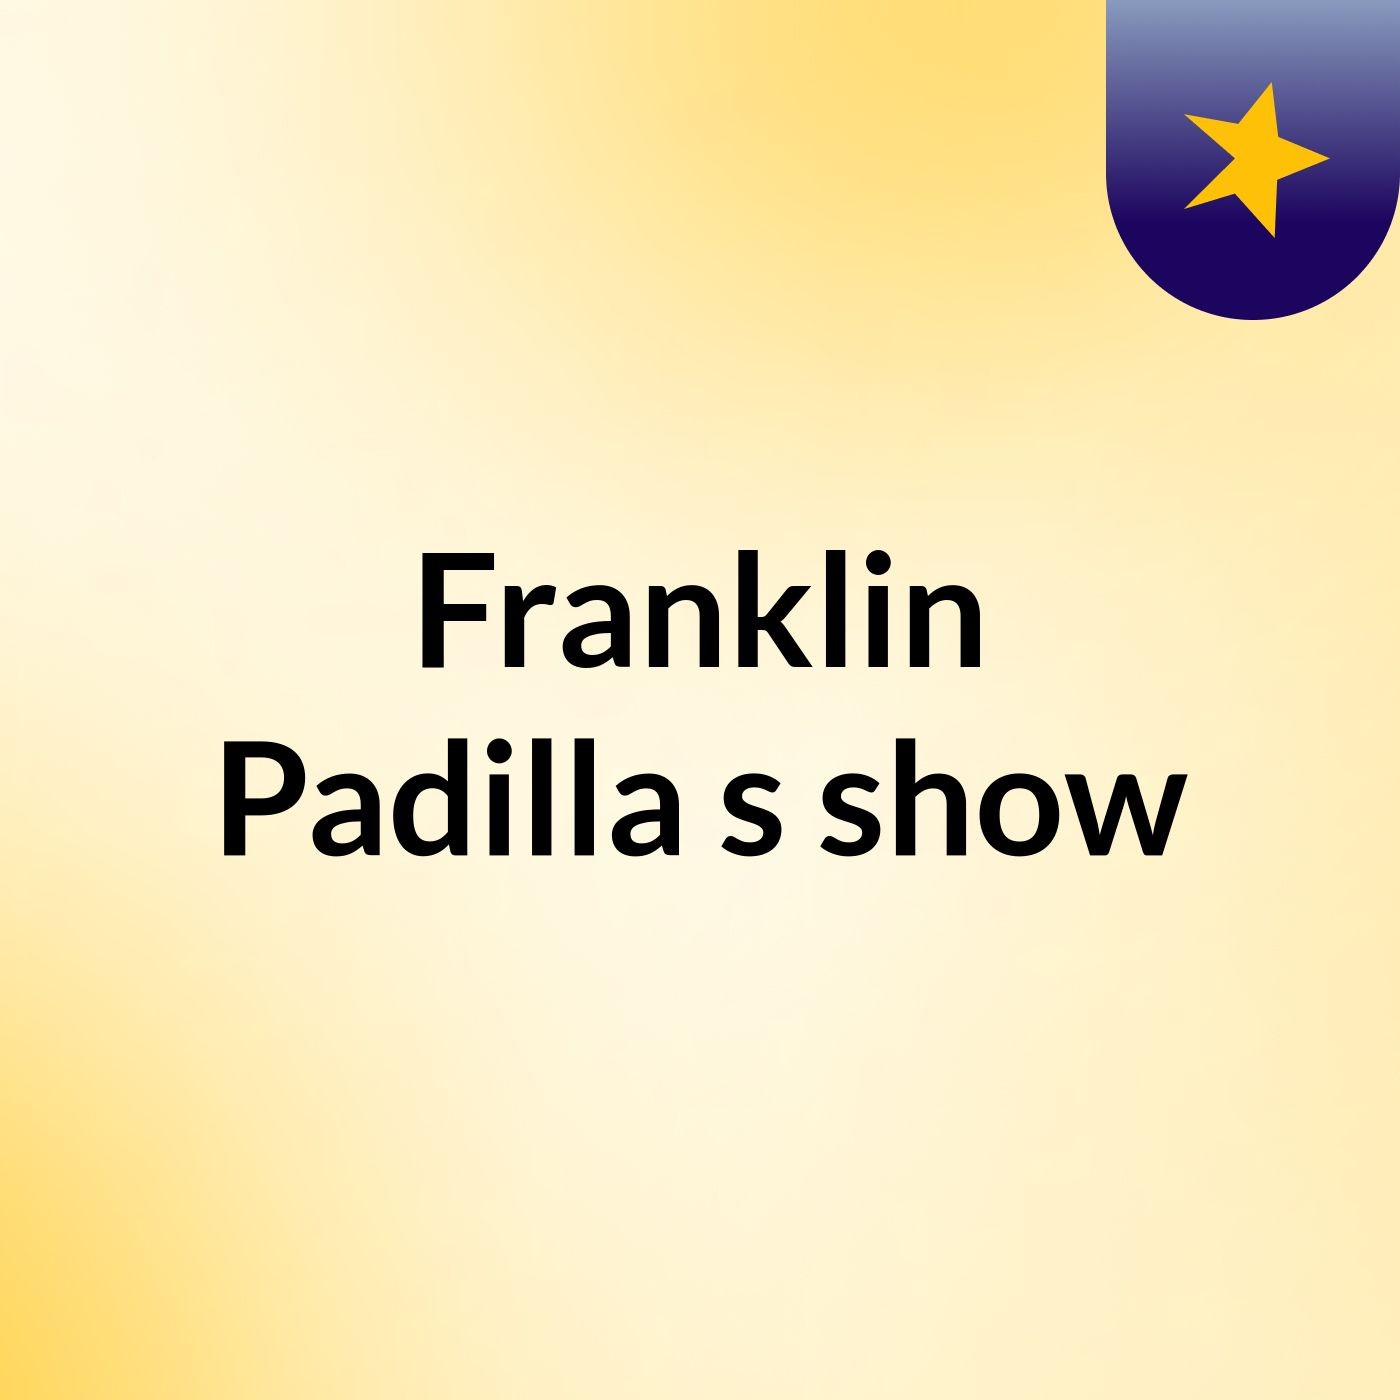 Franklin Padilla's show